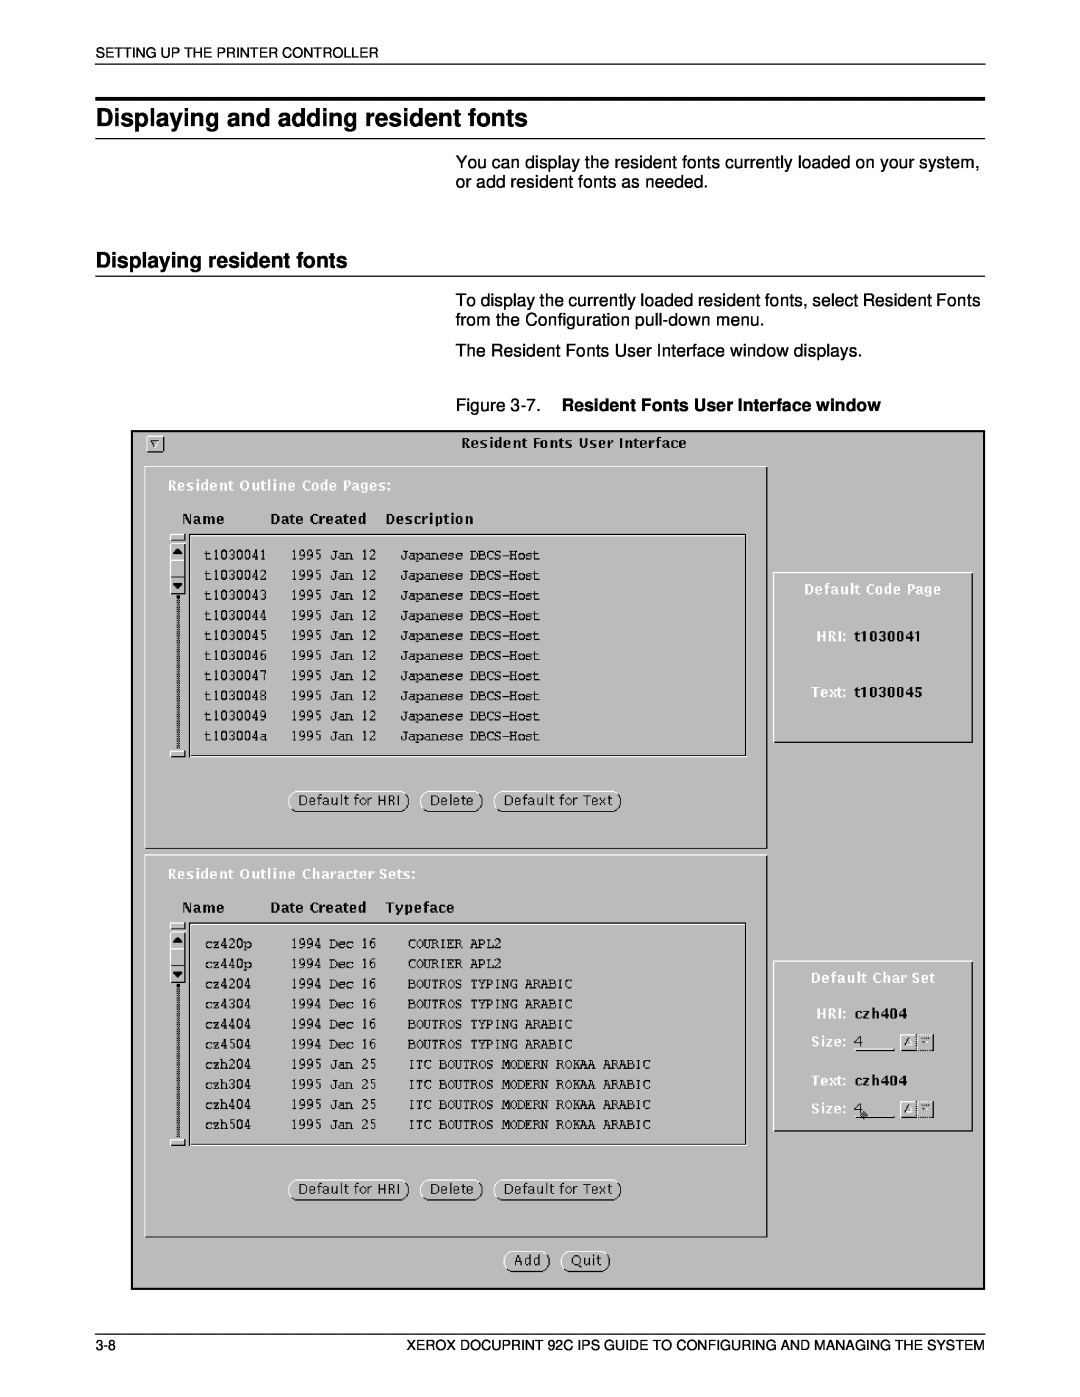 Xerox 92C IPS Displaying and adding resident fonts, Displaying resident fonts, 7. Resident Fonts User Interface window 